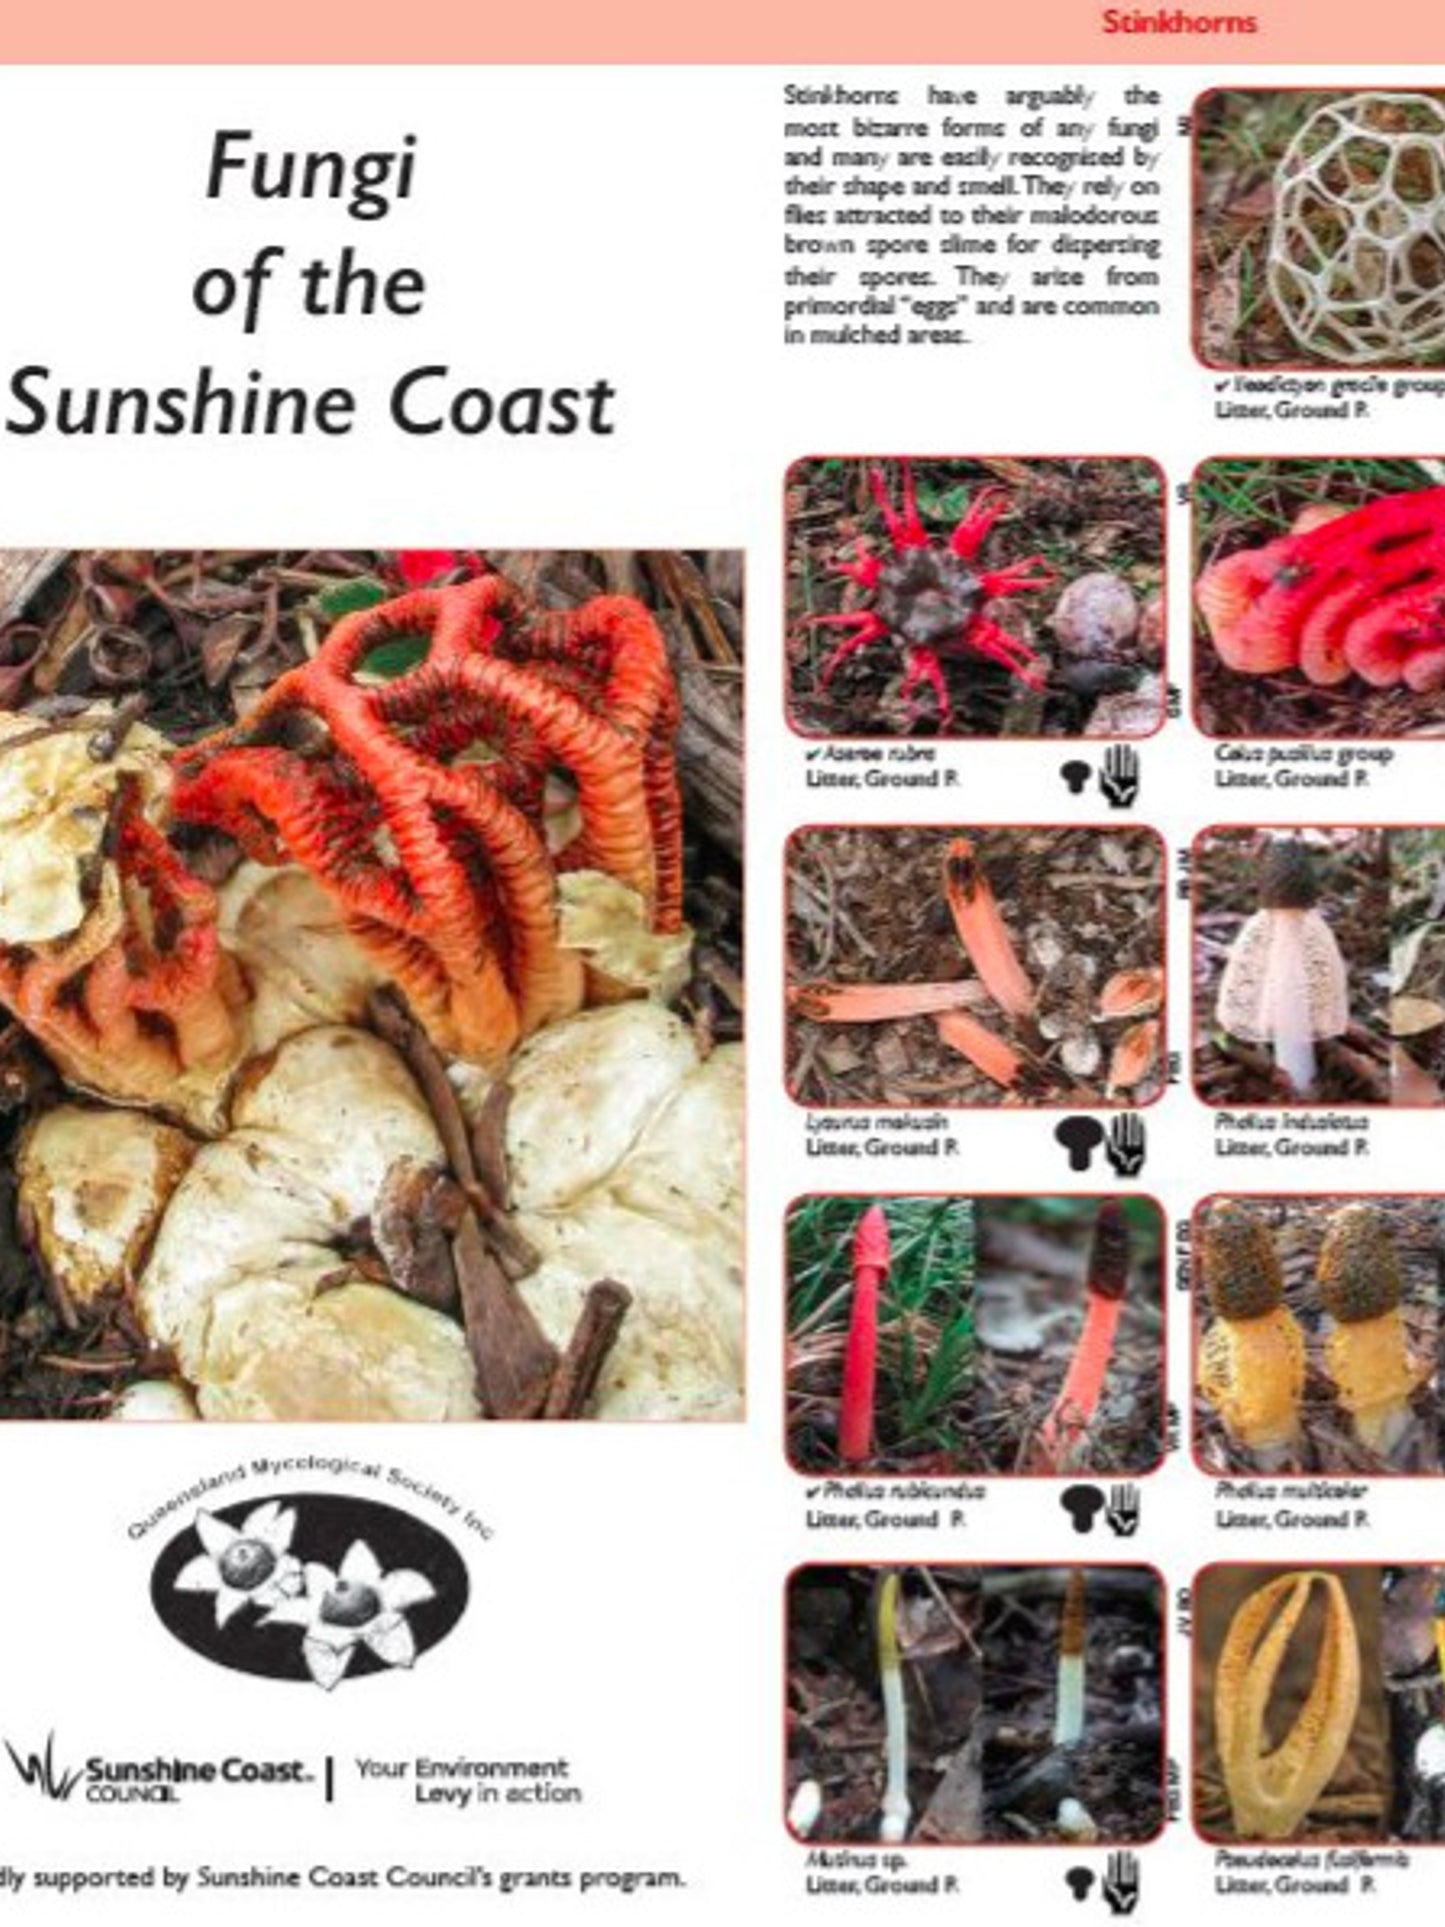 Pair of Guides: Mushrooms and Fungi of the Sunshine Coast